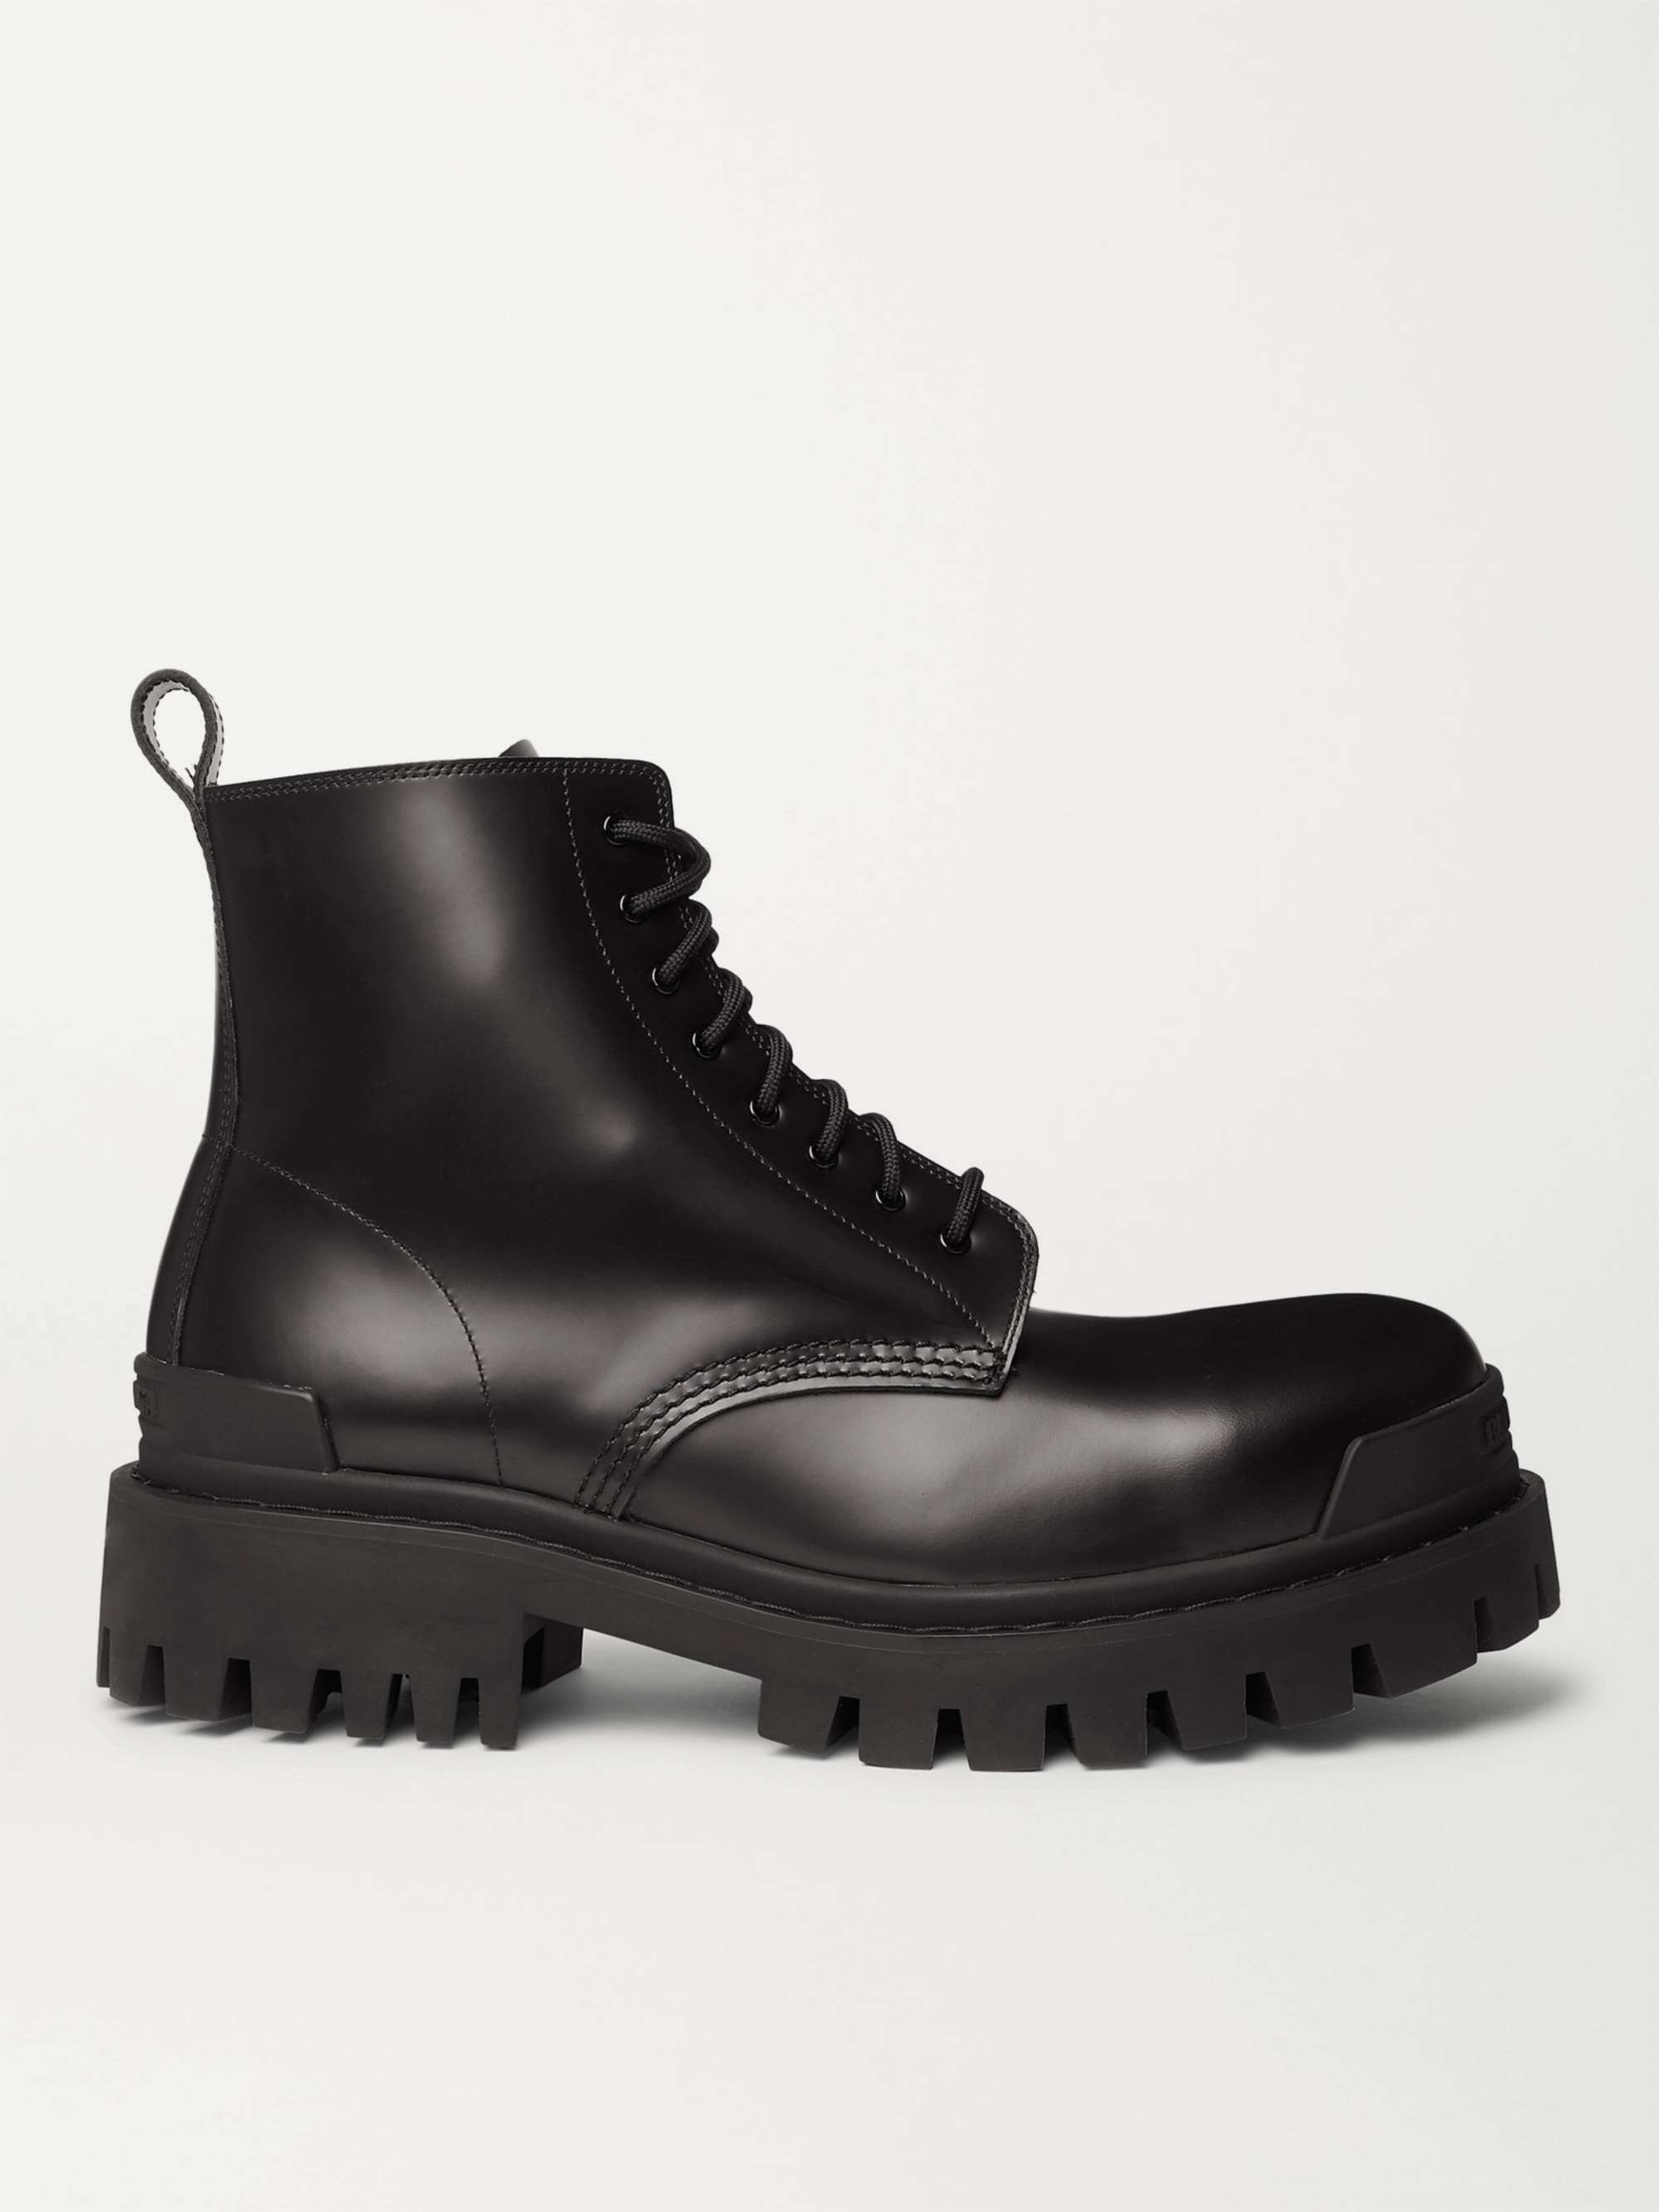 BALENCIAGA Leather Boots | MR PORTER